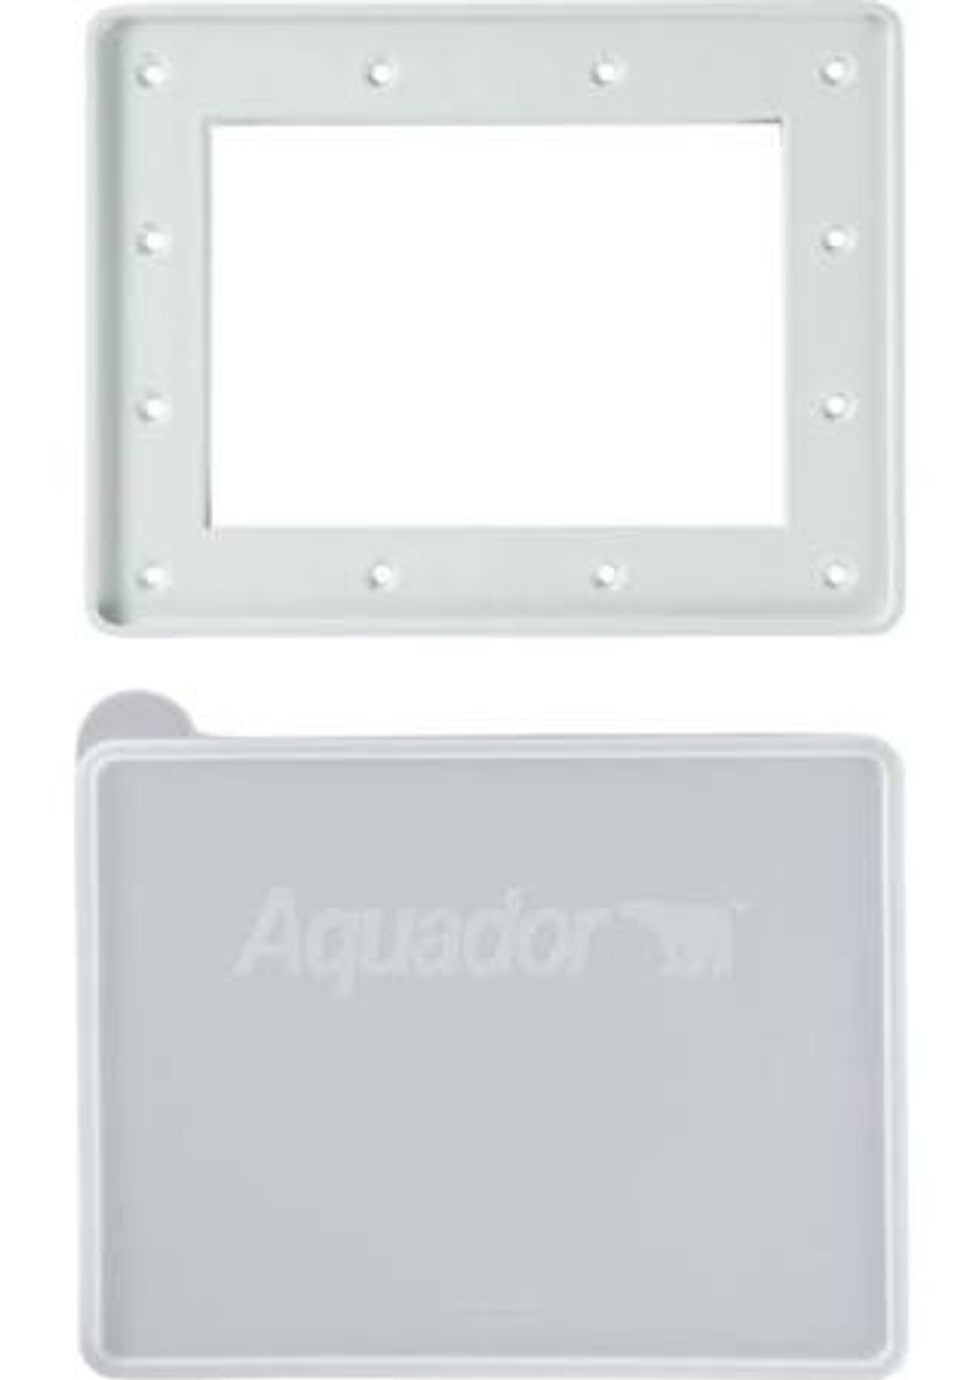 Aquador Skimmer Kit for Standard In Ground Pool Skimmers